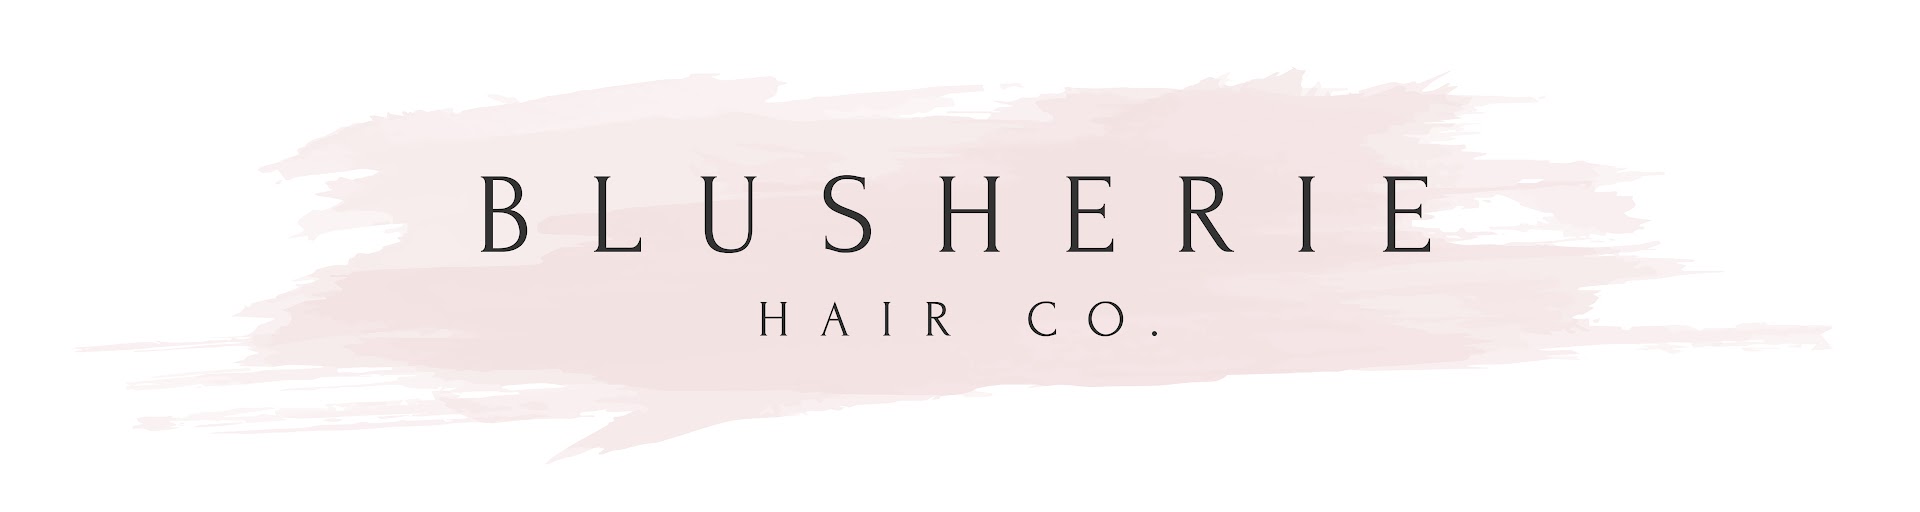 Blusherie Hair Co